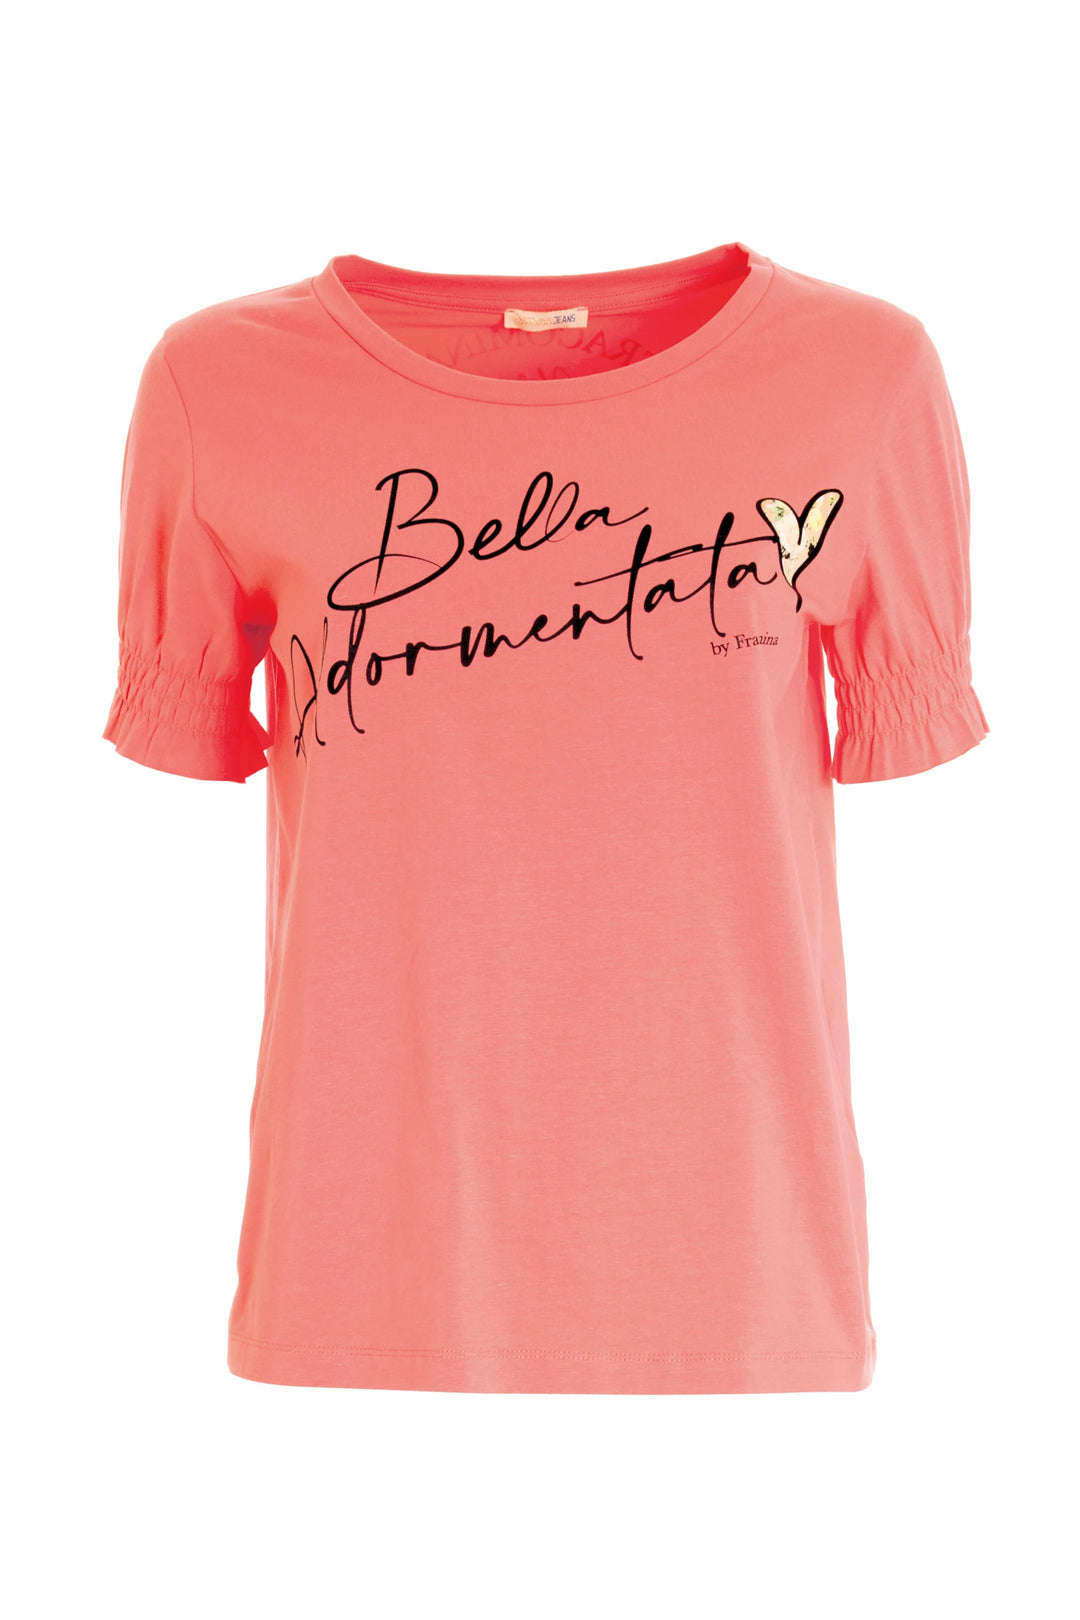 FRACOMINA T-shirt regular in jersey melon con stampa 'bella' - Mancinelli 1954